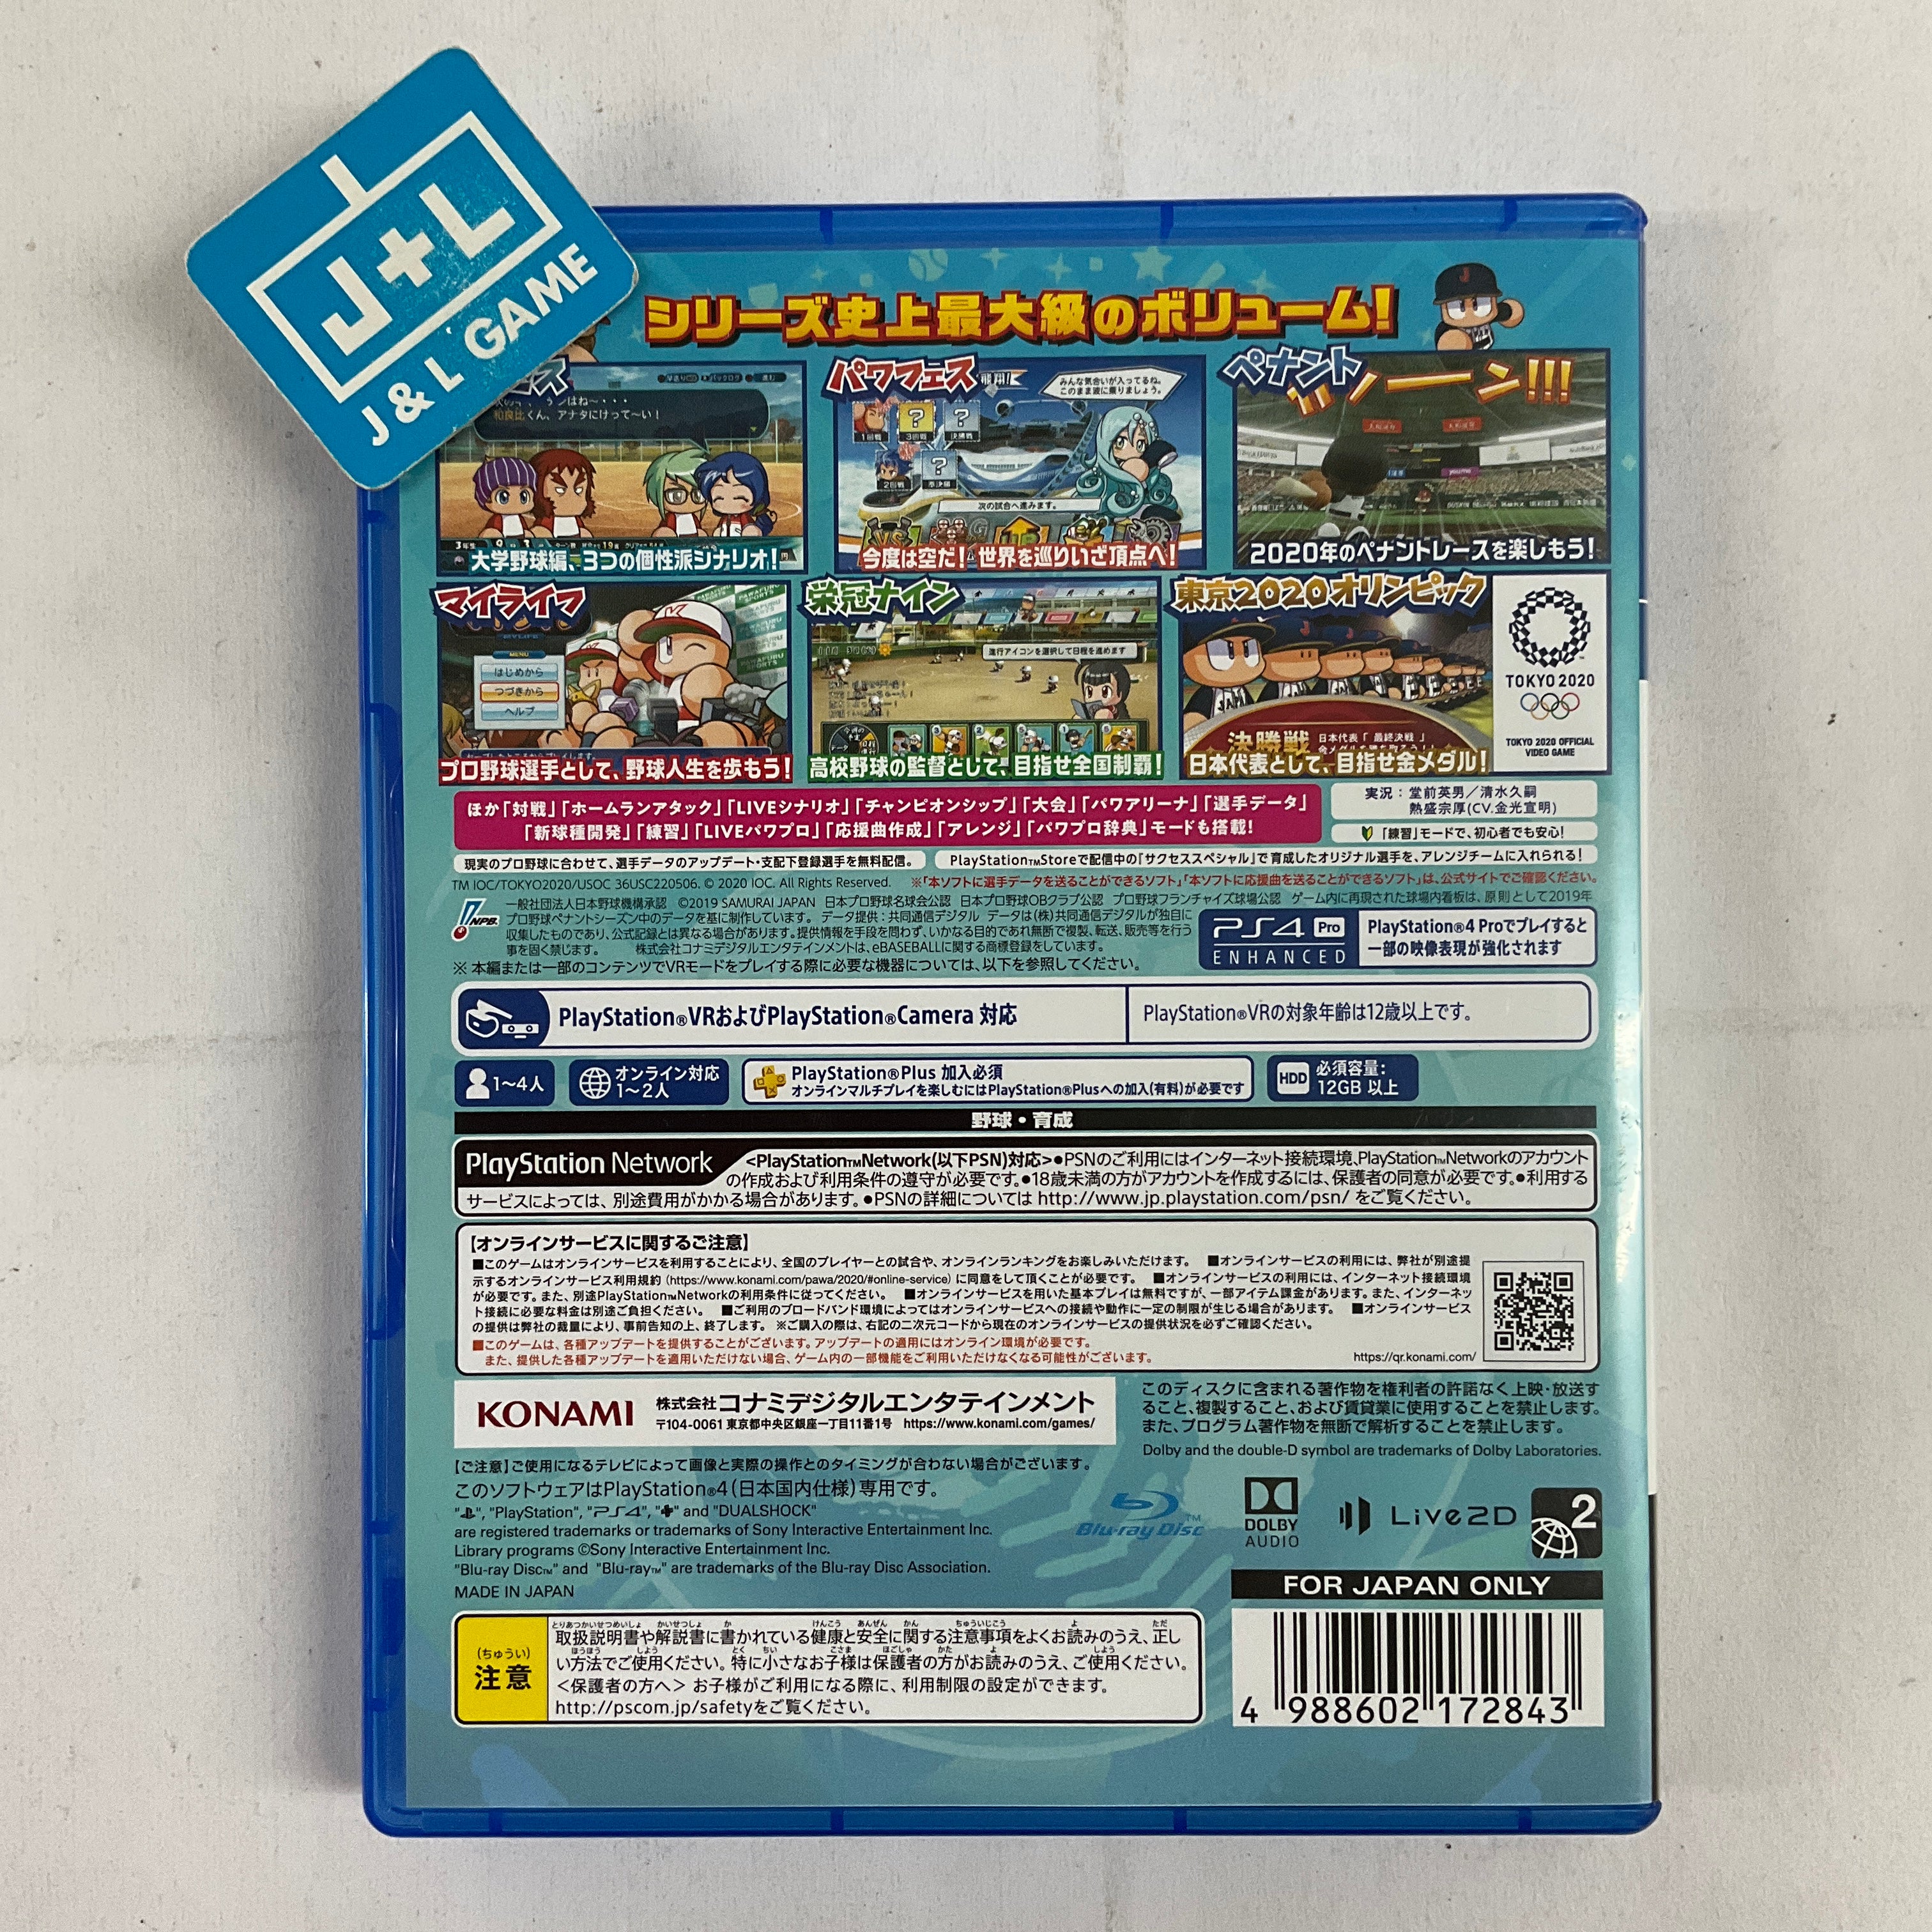 eBaseball Powerful Pro Yakyuu 2020 - (PS4) Playstation 4 [Pre-Owned] (Japanese Import) Video Games Konami   